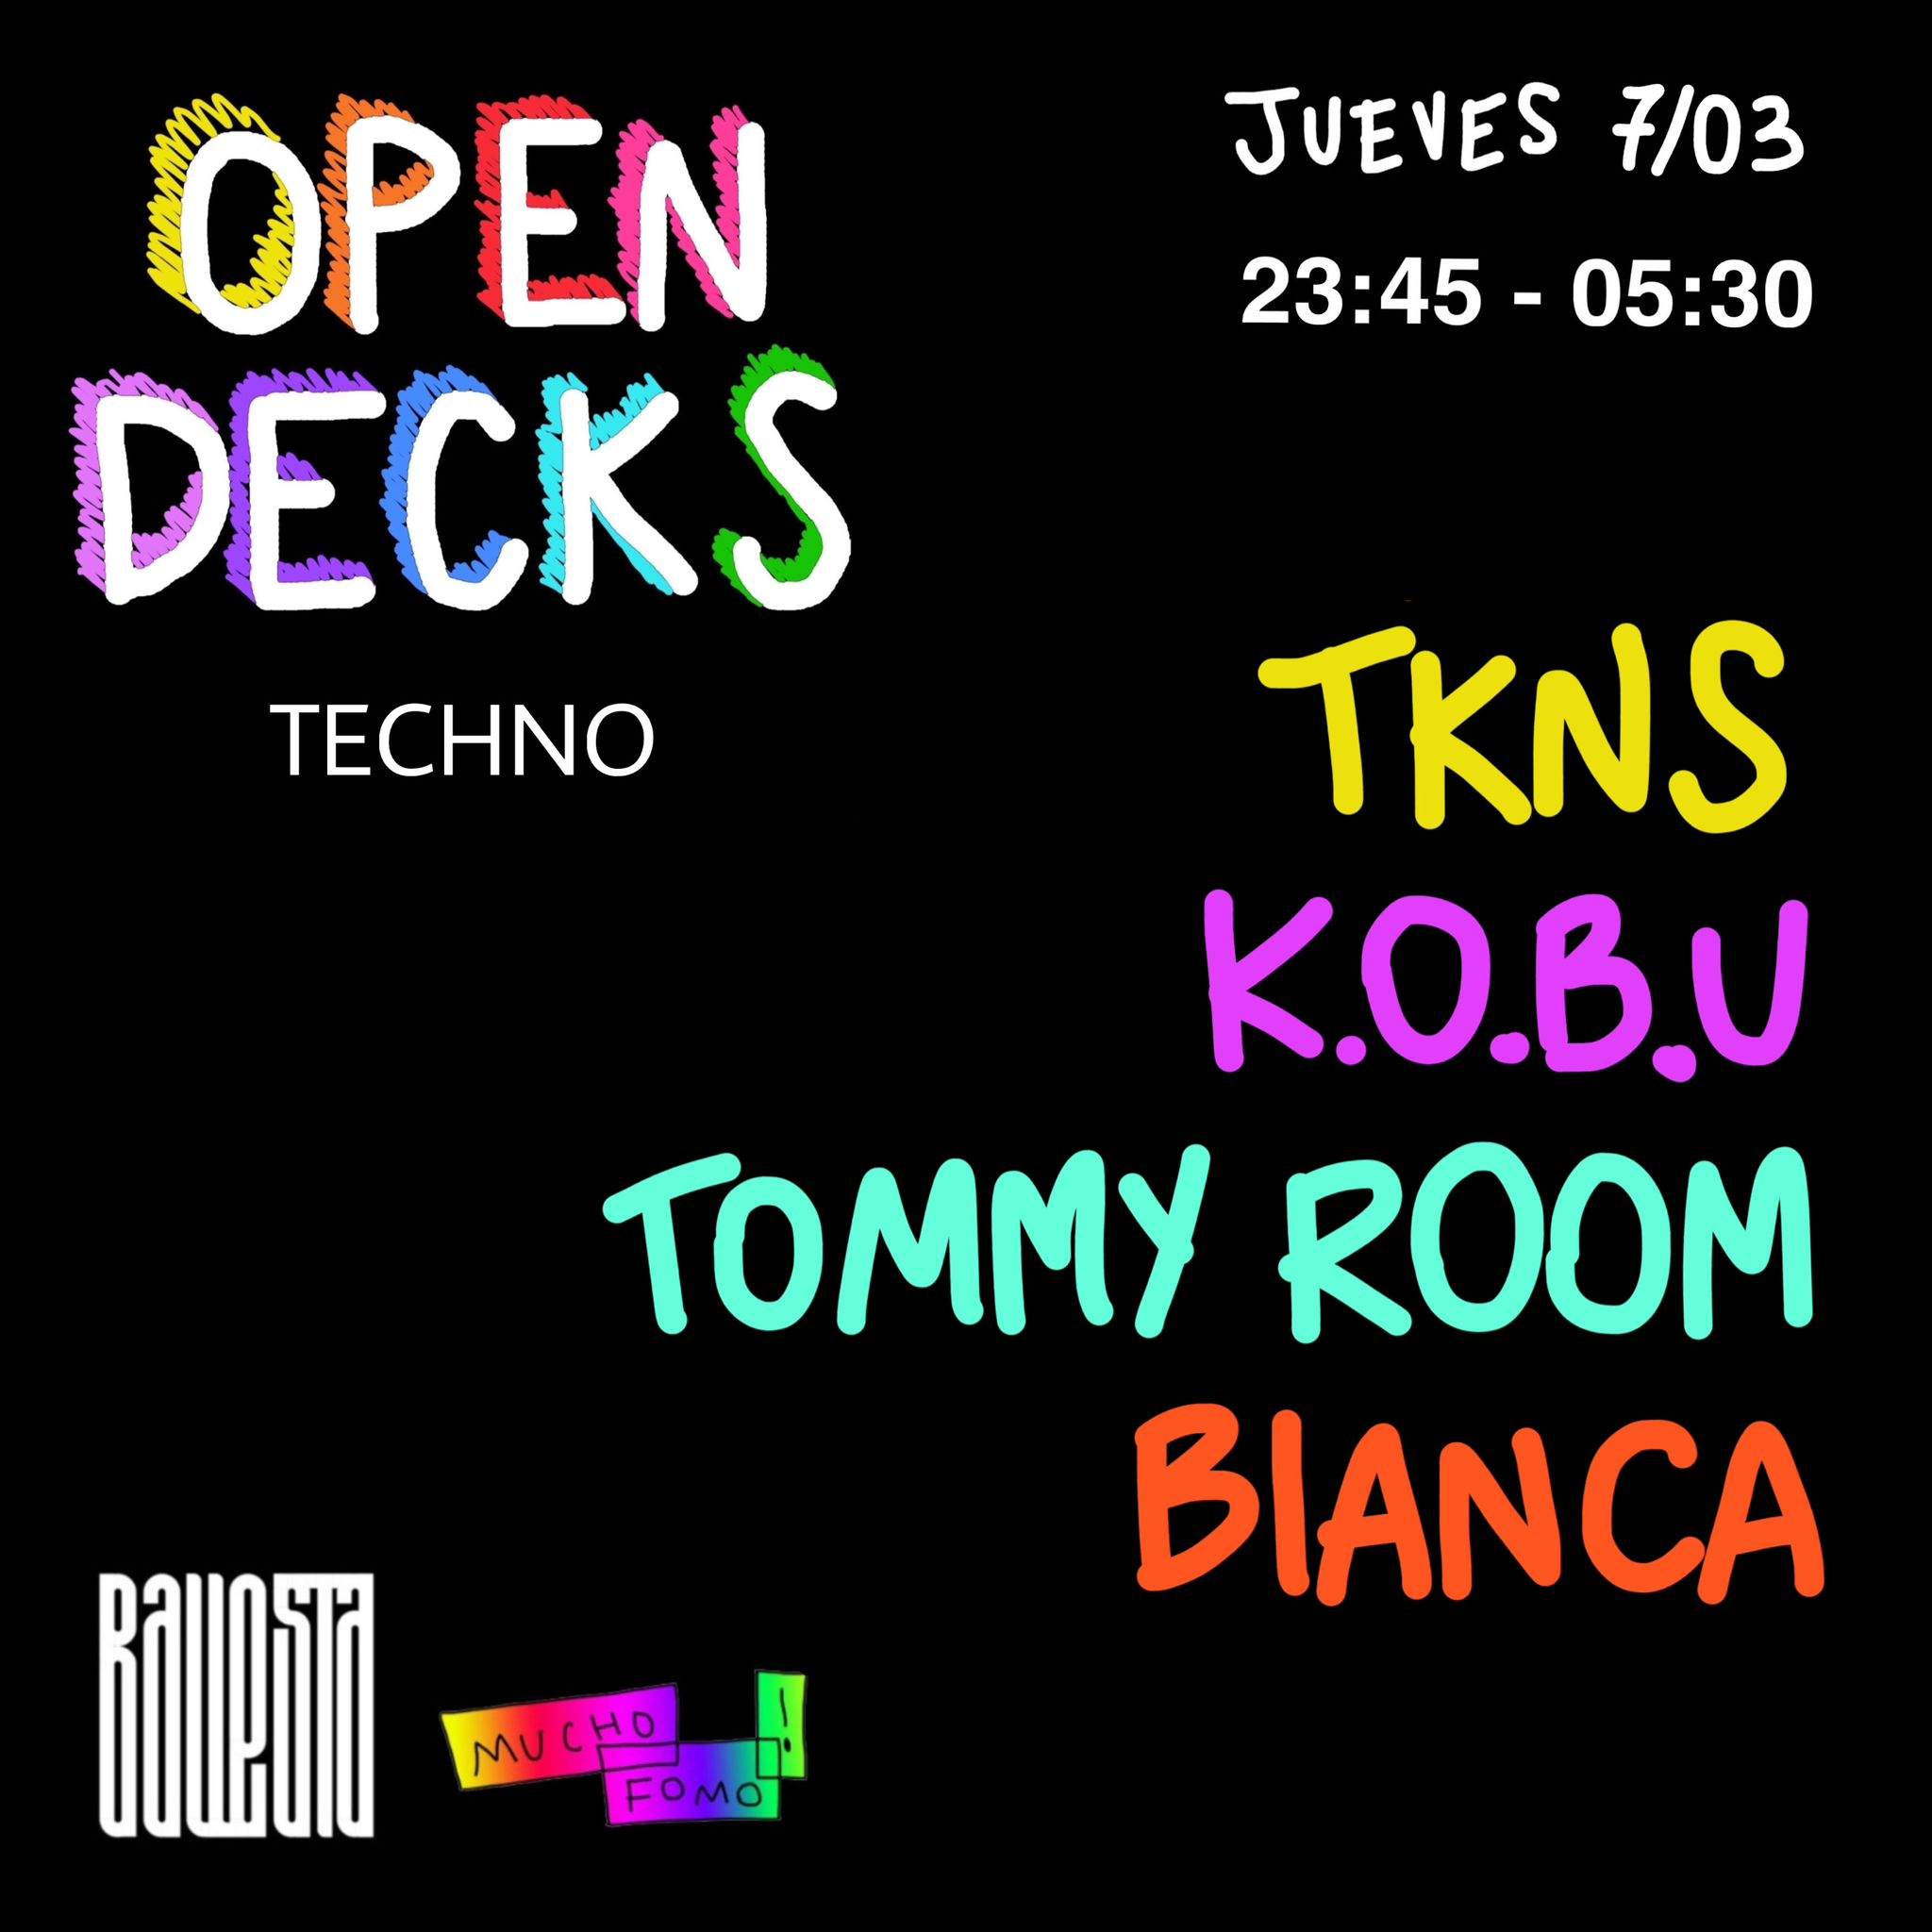 MUCHO FOMO (Open decks): TKNS + K.O.B.U + Tommy Room + Bianca - フライヤー表